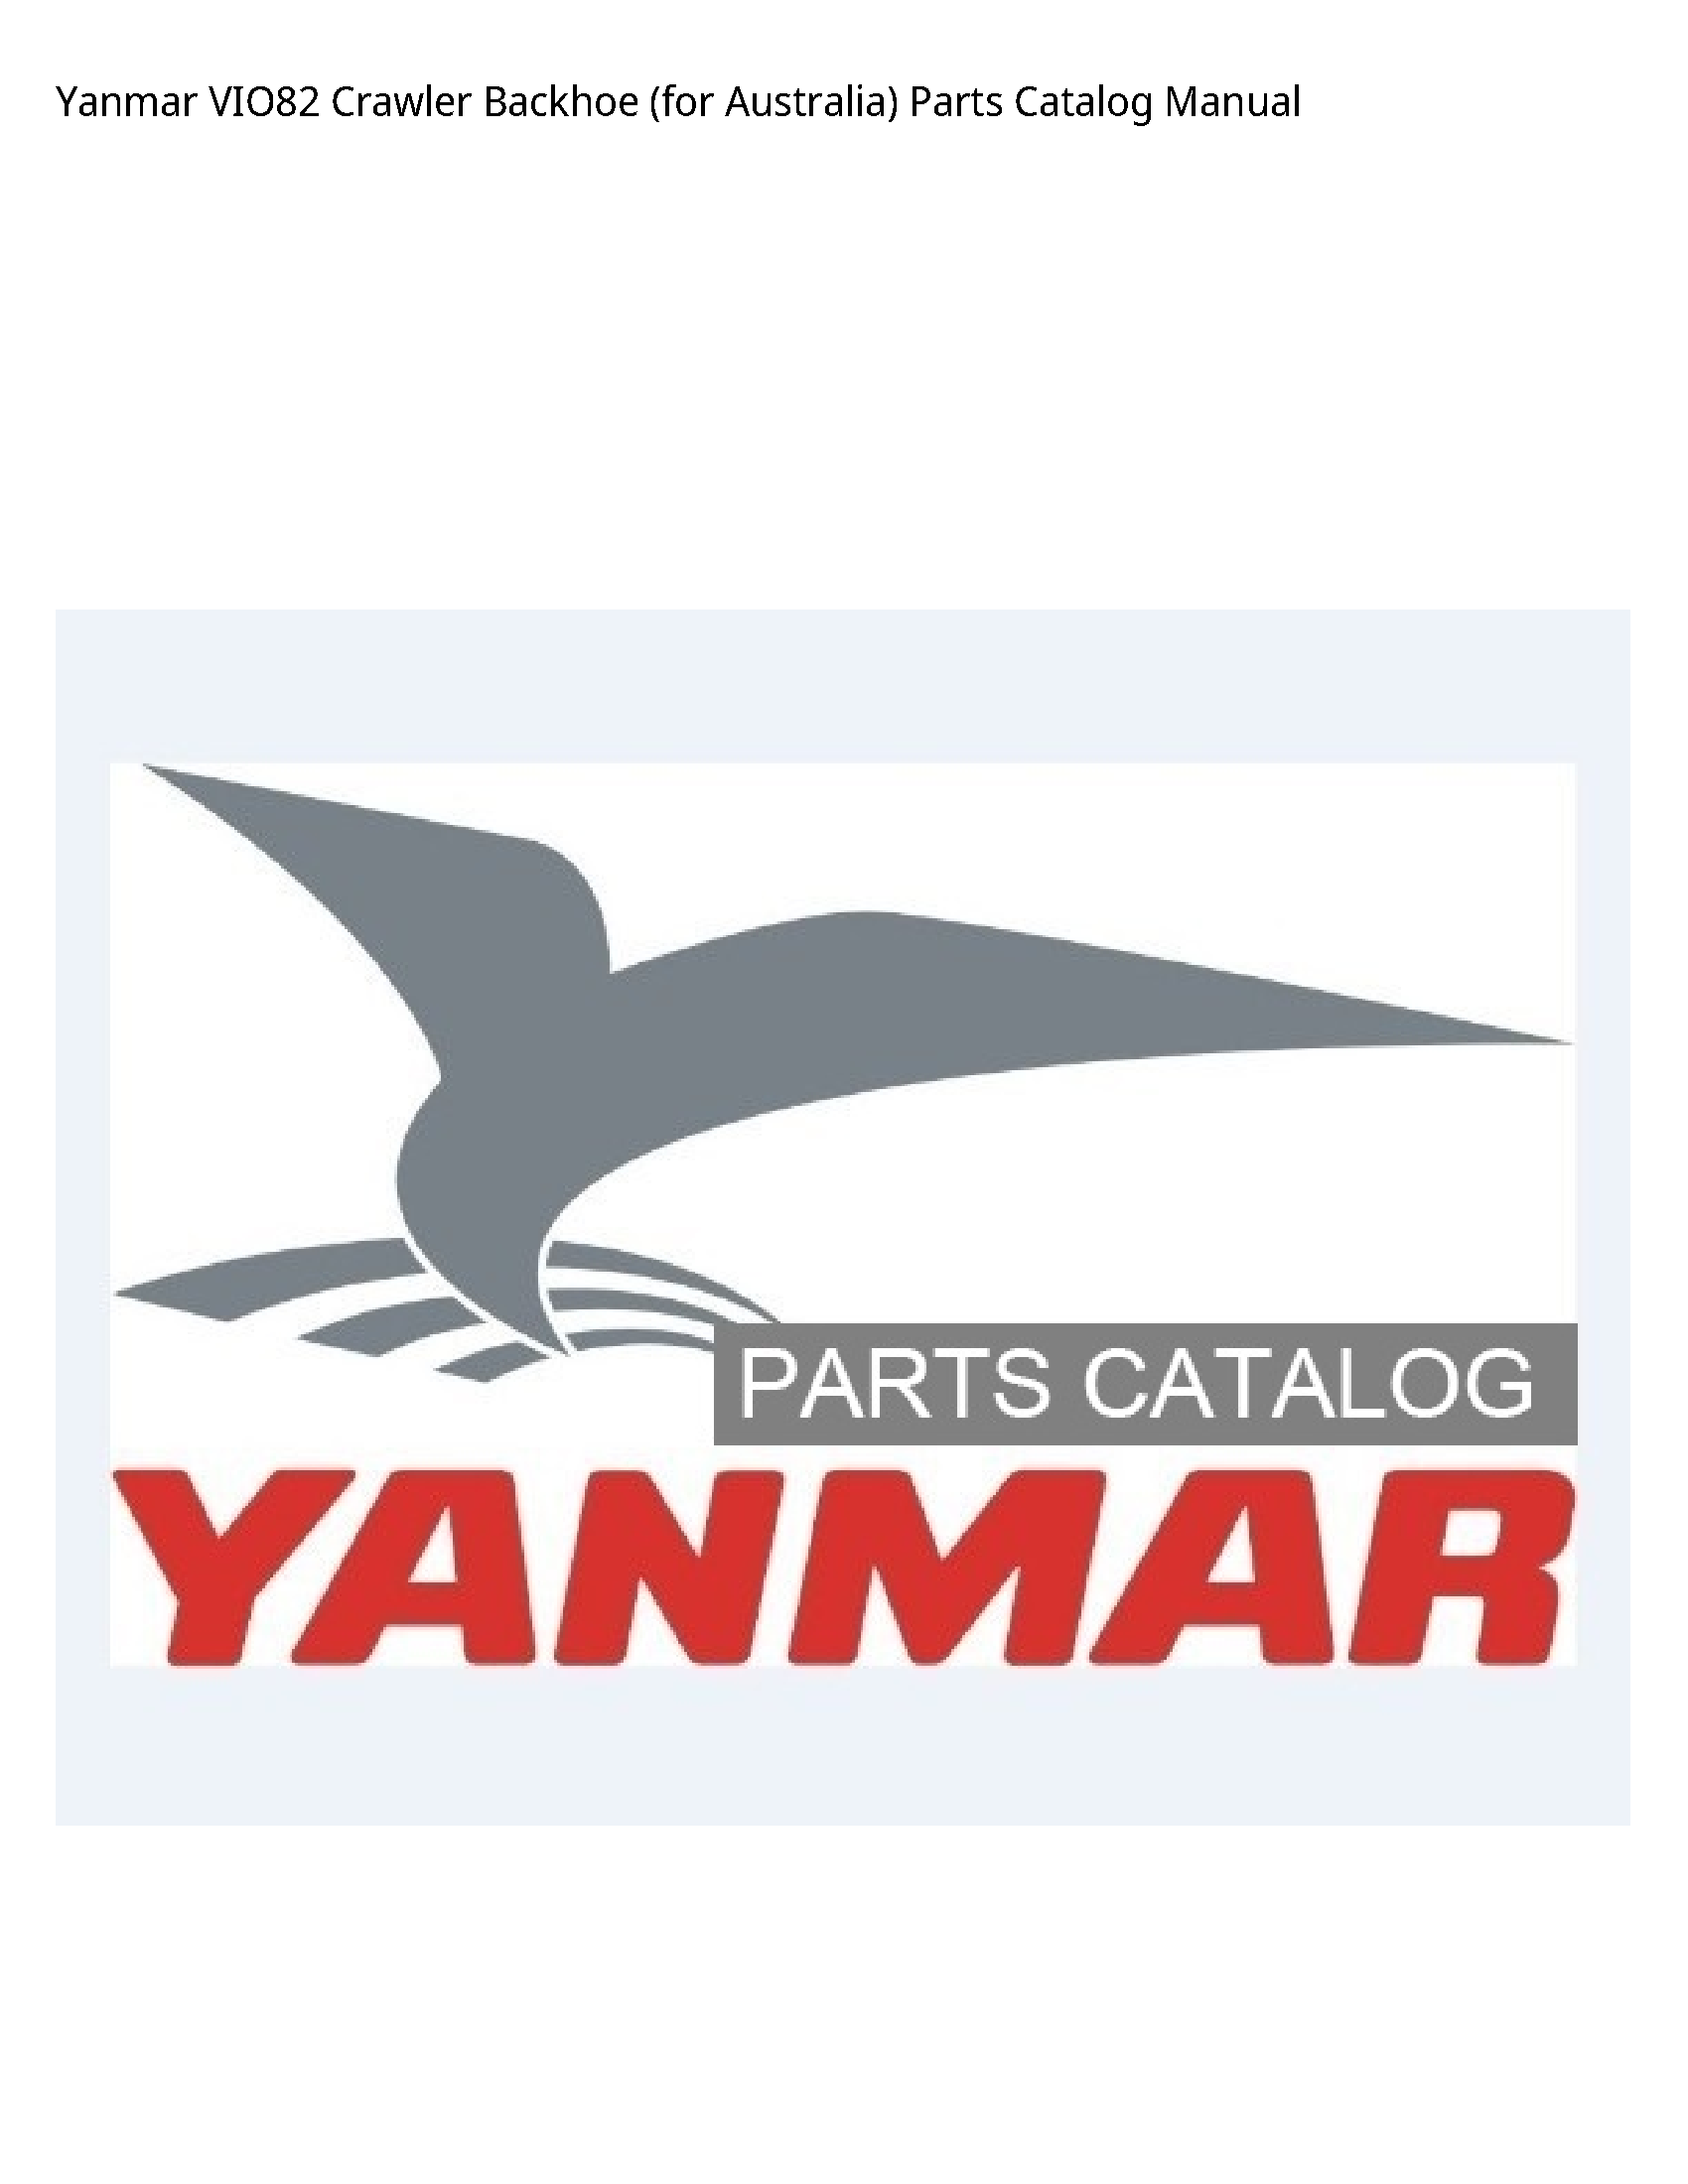 Yanmar VIO82 Crawler Backhoe (for Australia) Parts Catalog manual